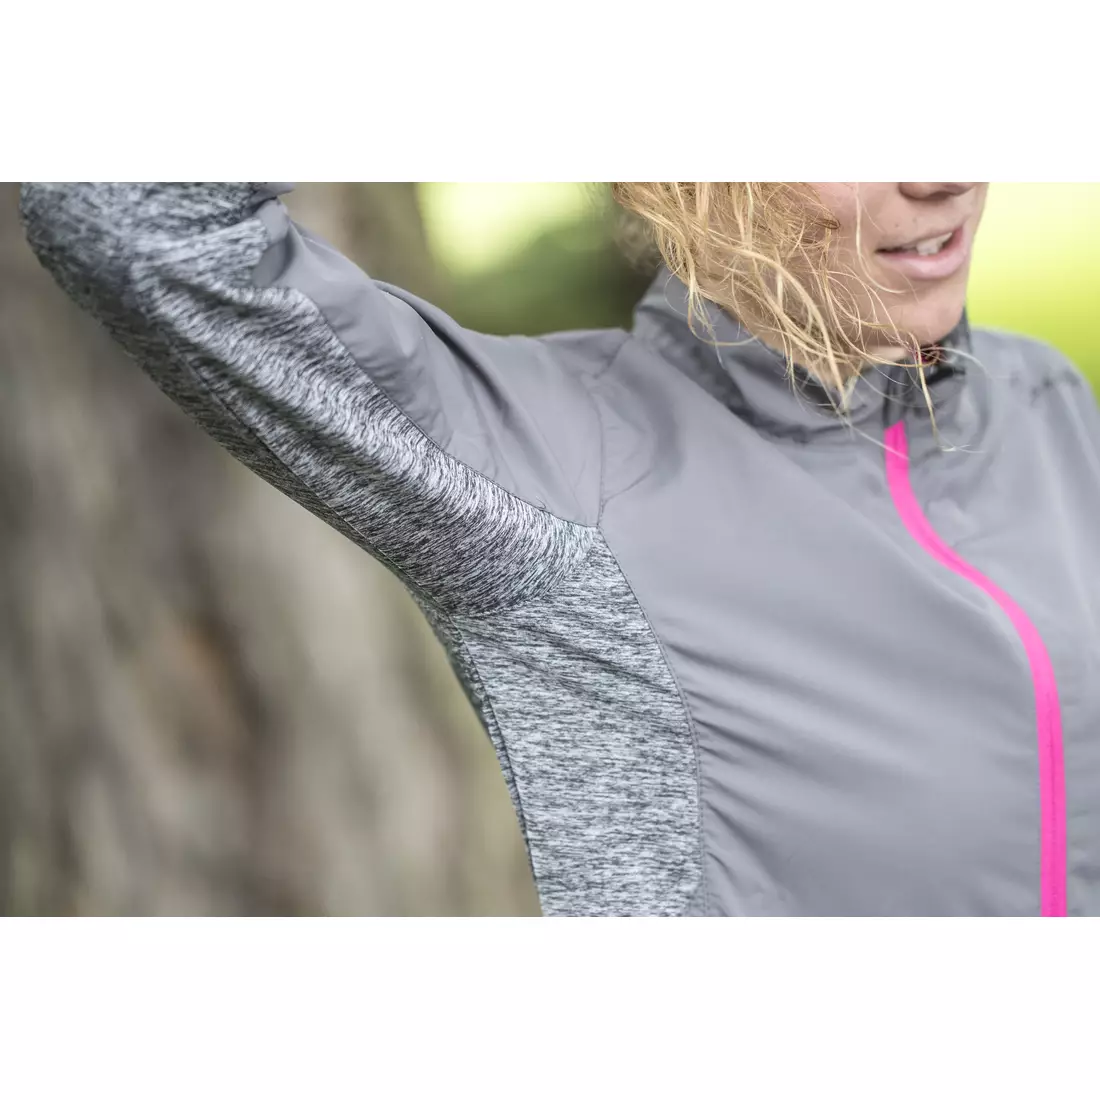 ROGELLI RUN SAMANTA 840.861 - women's running windbreaker jacket, gray and pink